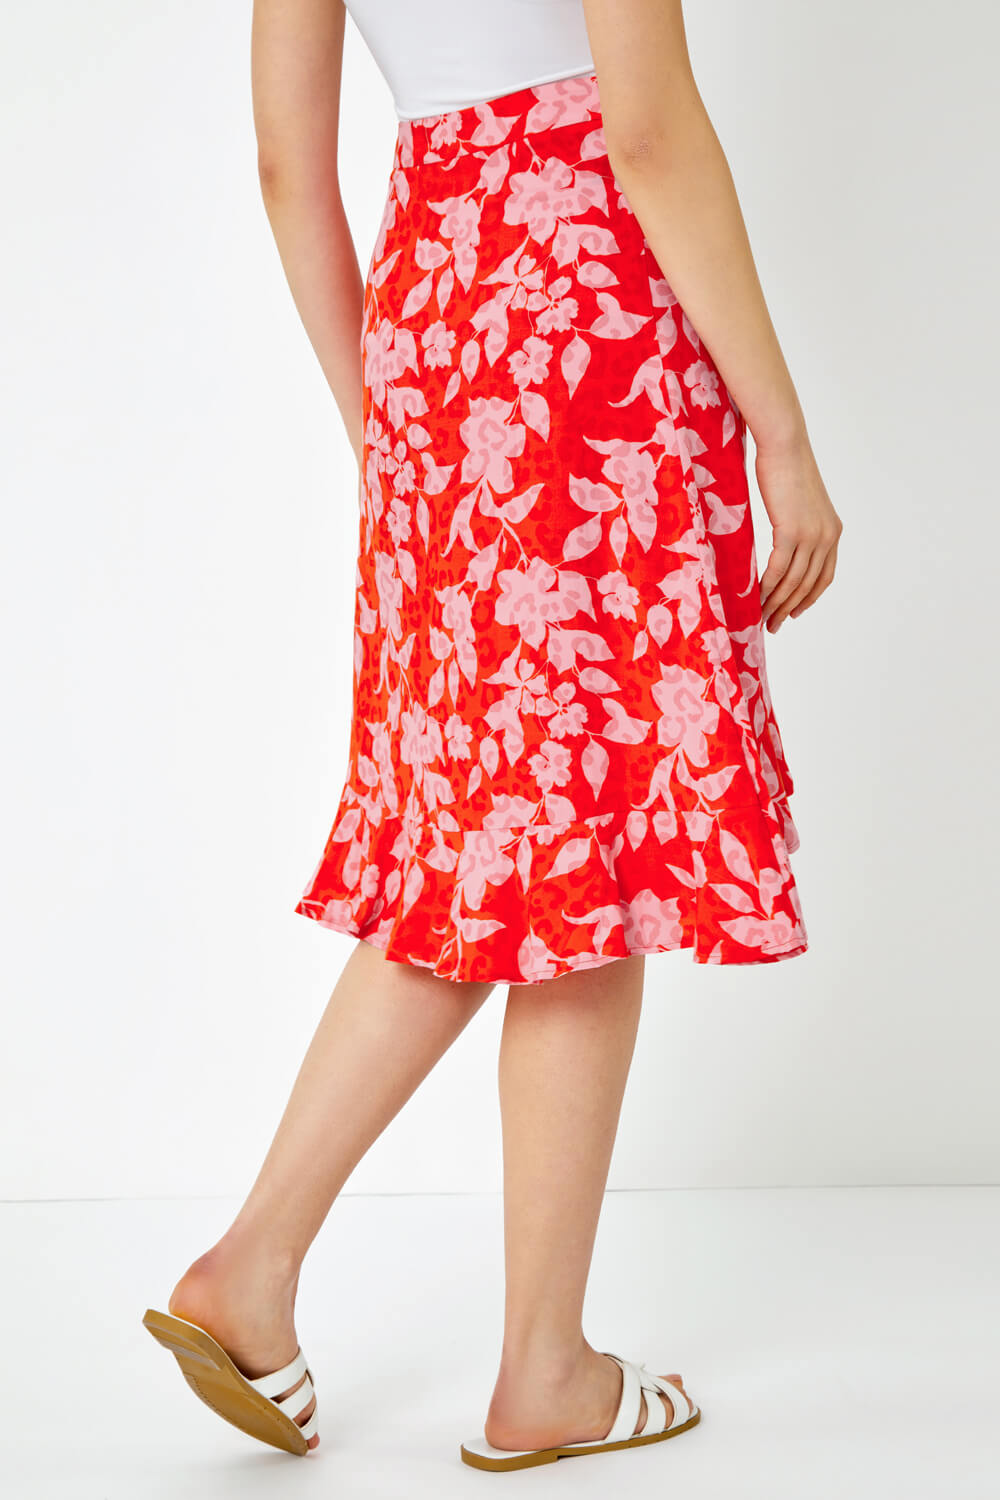 ORANGE Floral Frill Detail Wrap Skirt, Image 3 of 5